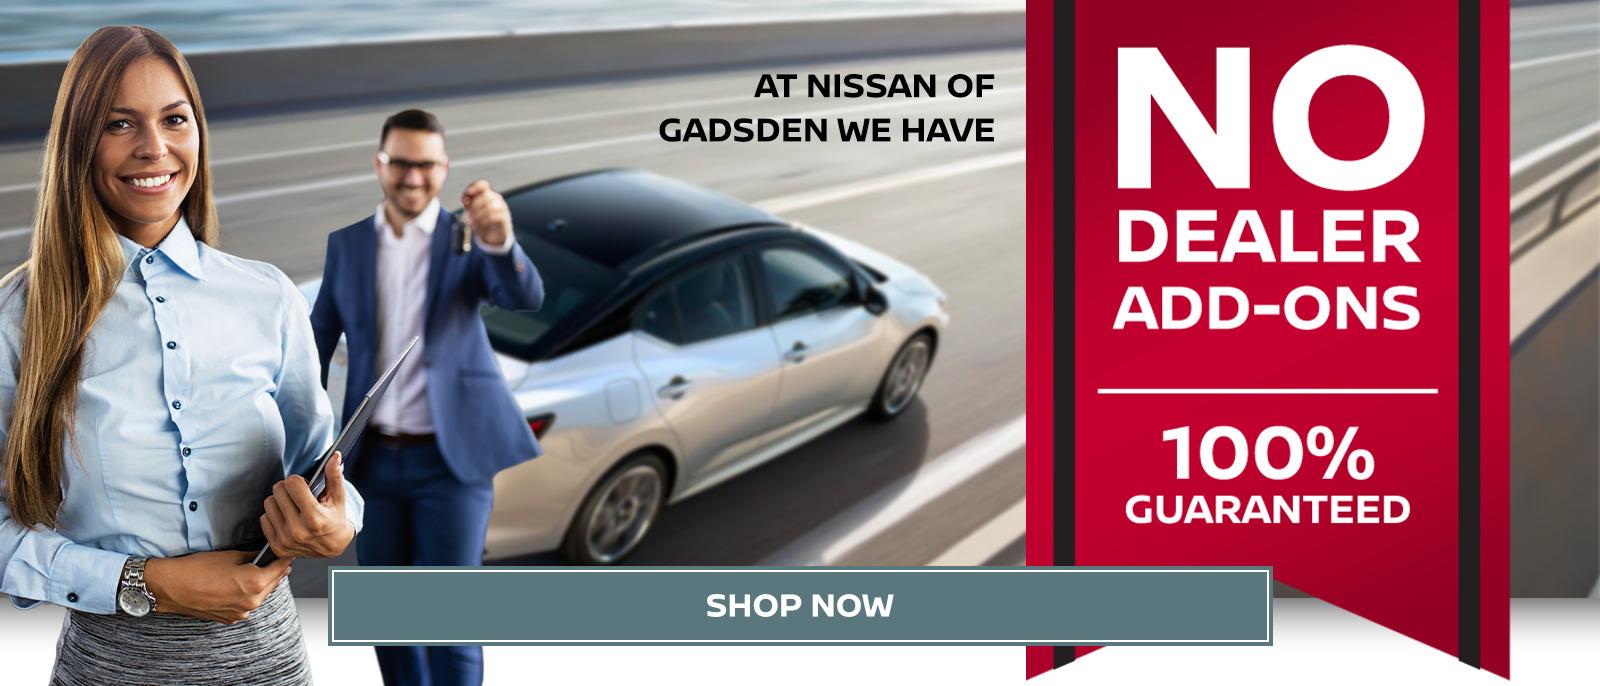 No Dealer Add-Ons at Gadsden Nissan